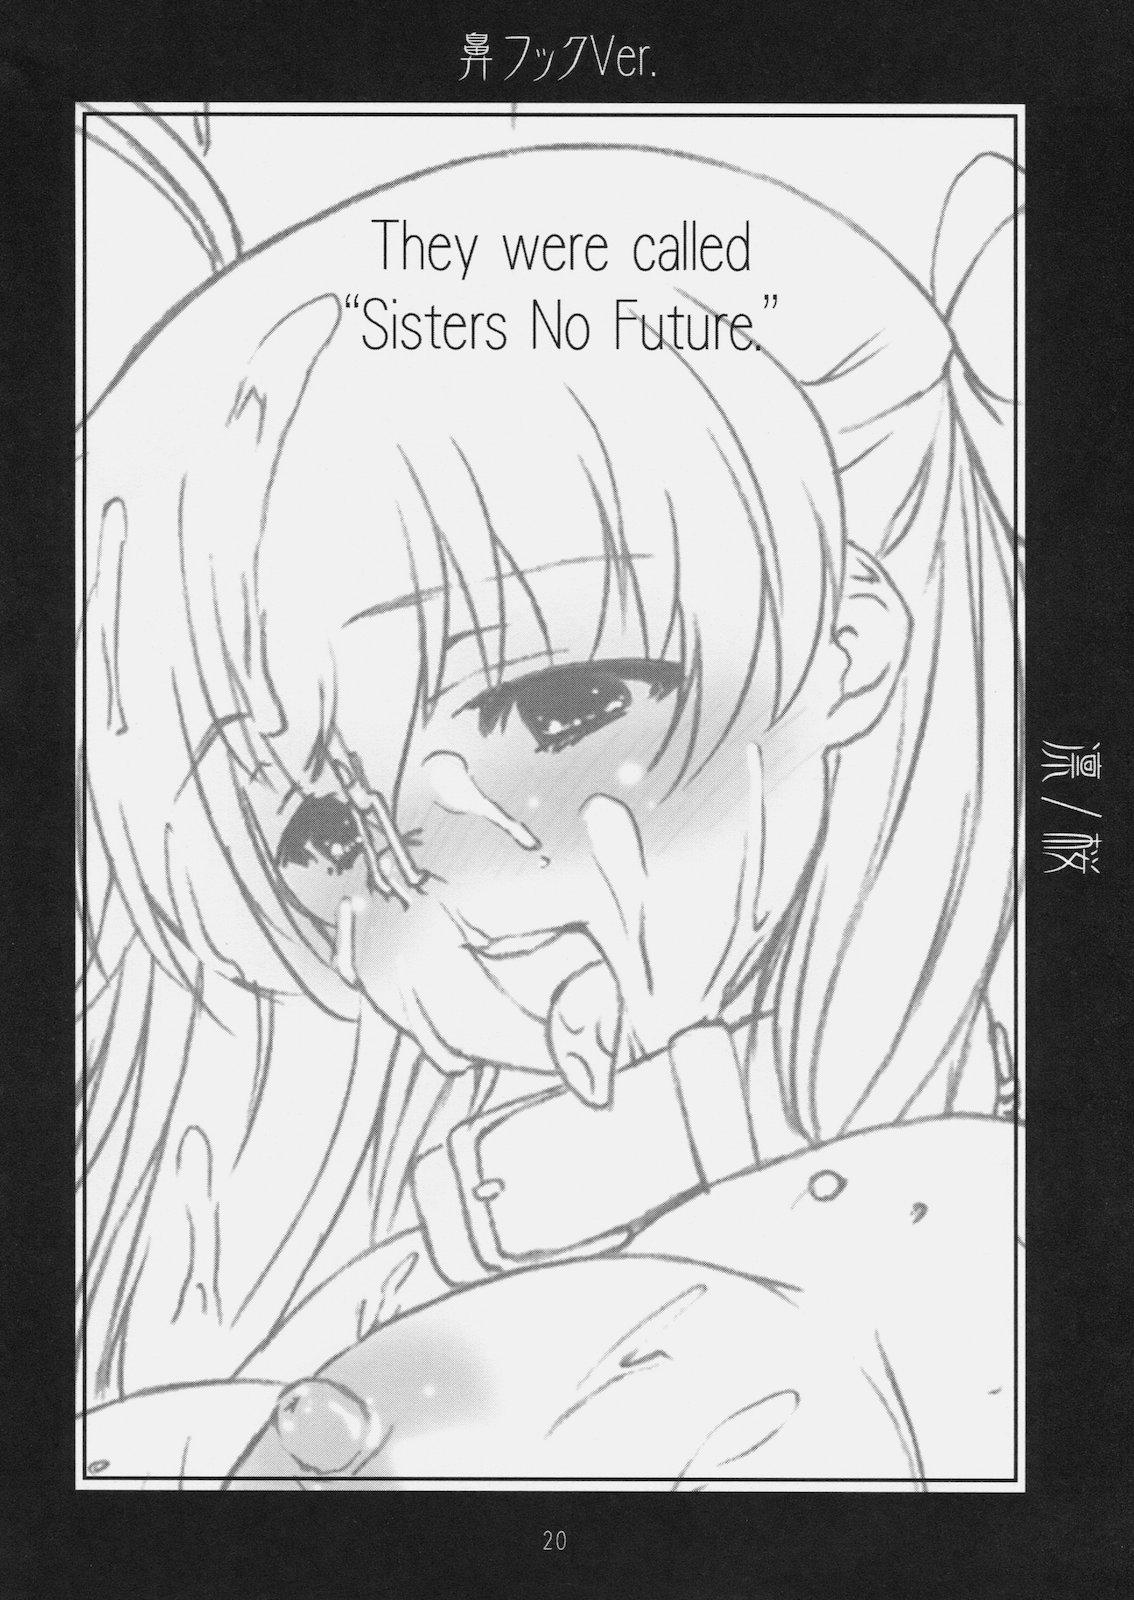 Sister No Future. Rin/Sakura 19